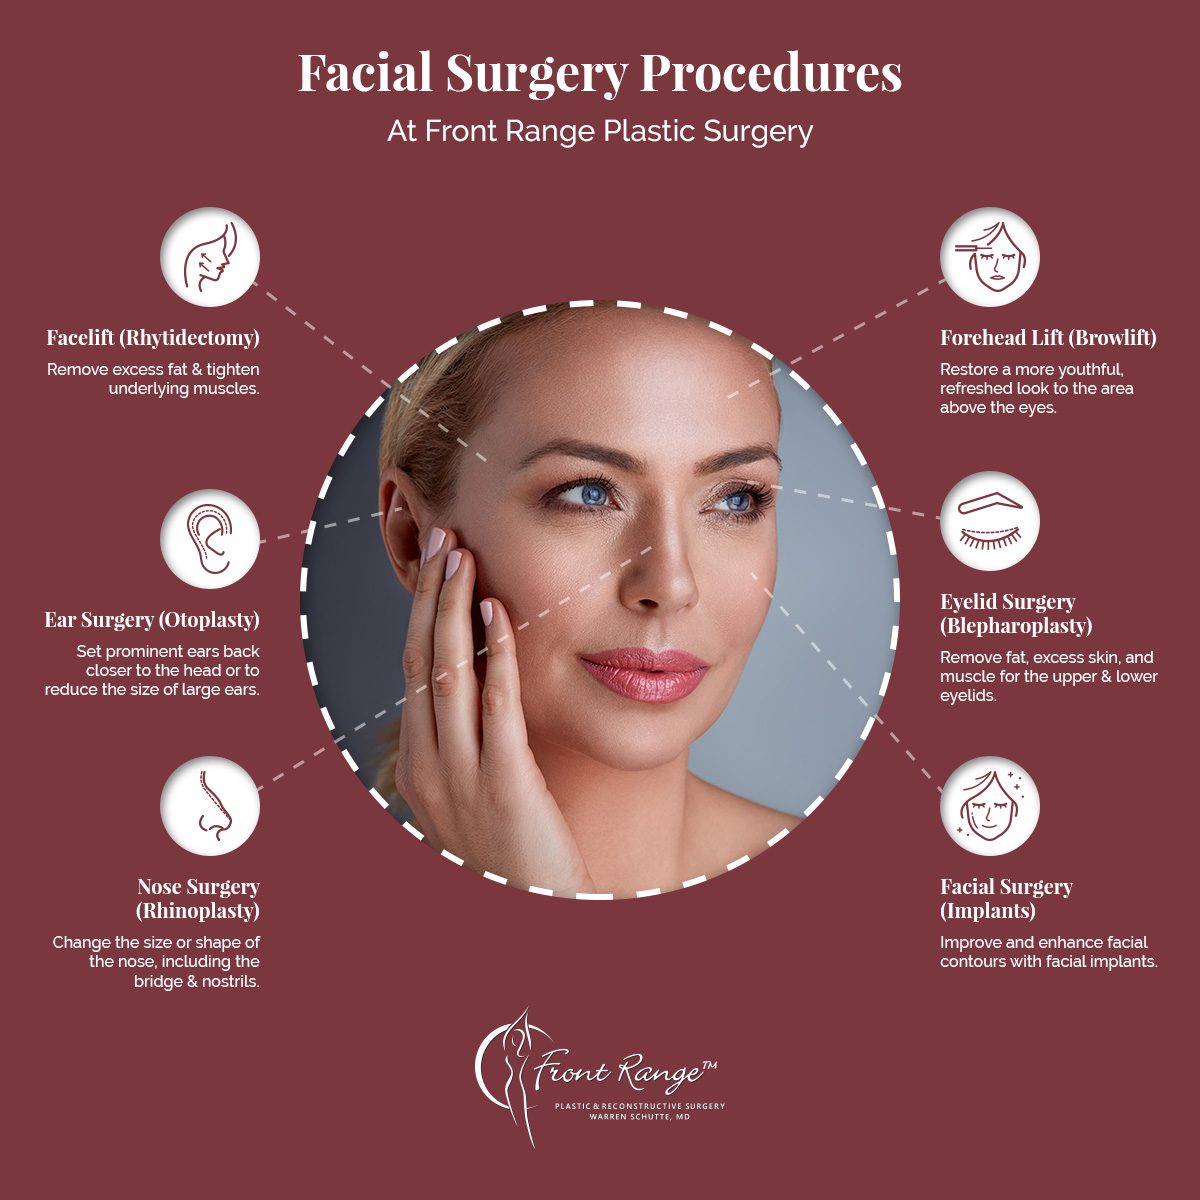 Facial Surgery Procedures At Front Range Plastic Surgery